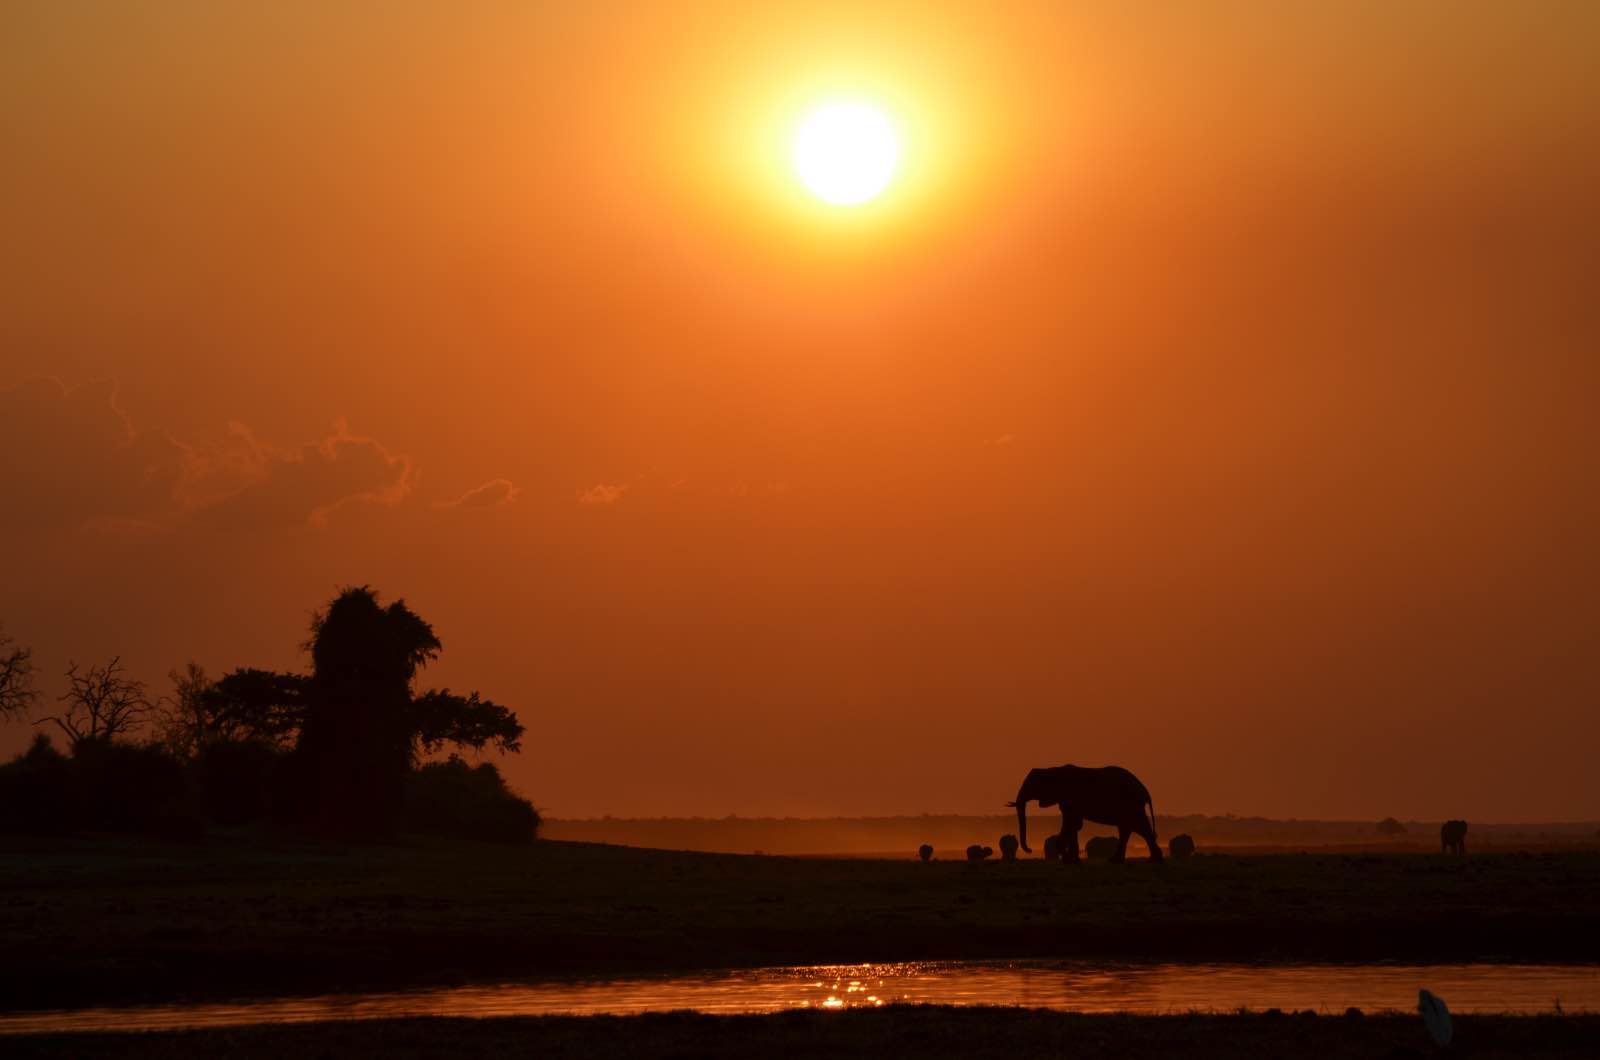 Scenes of a sunset at Chobe River at Chilwero